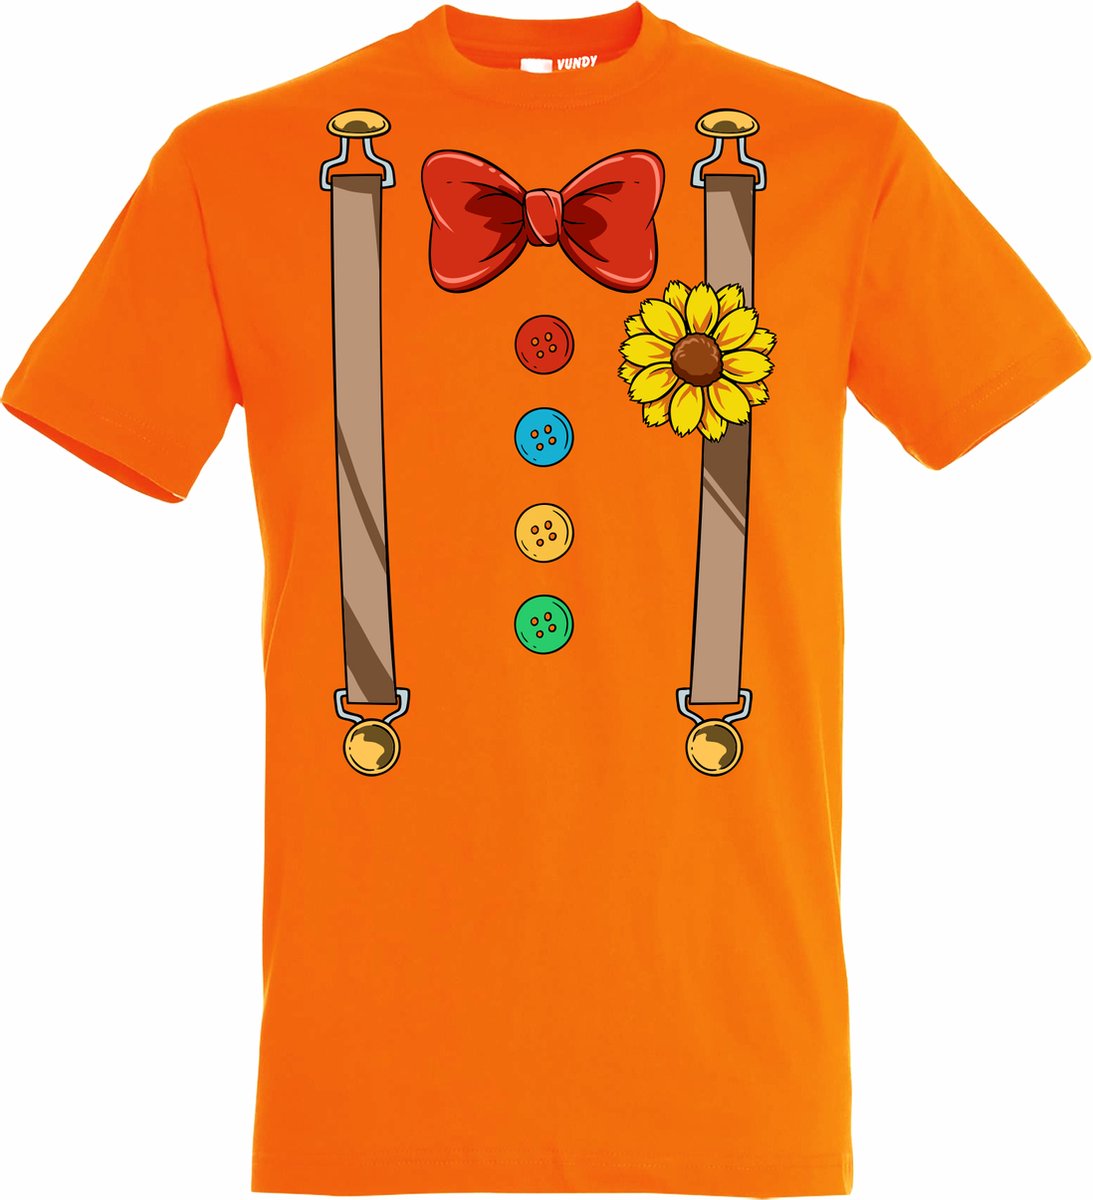 T-shirt kinderen Bretels Kostuum | Carnaval | Carnavalskleding Kinderen Baby | Oranje | maat 68